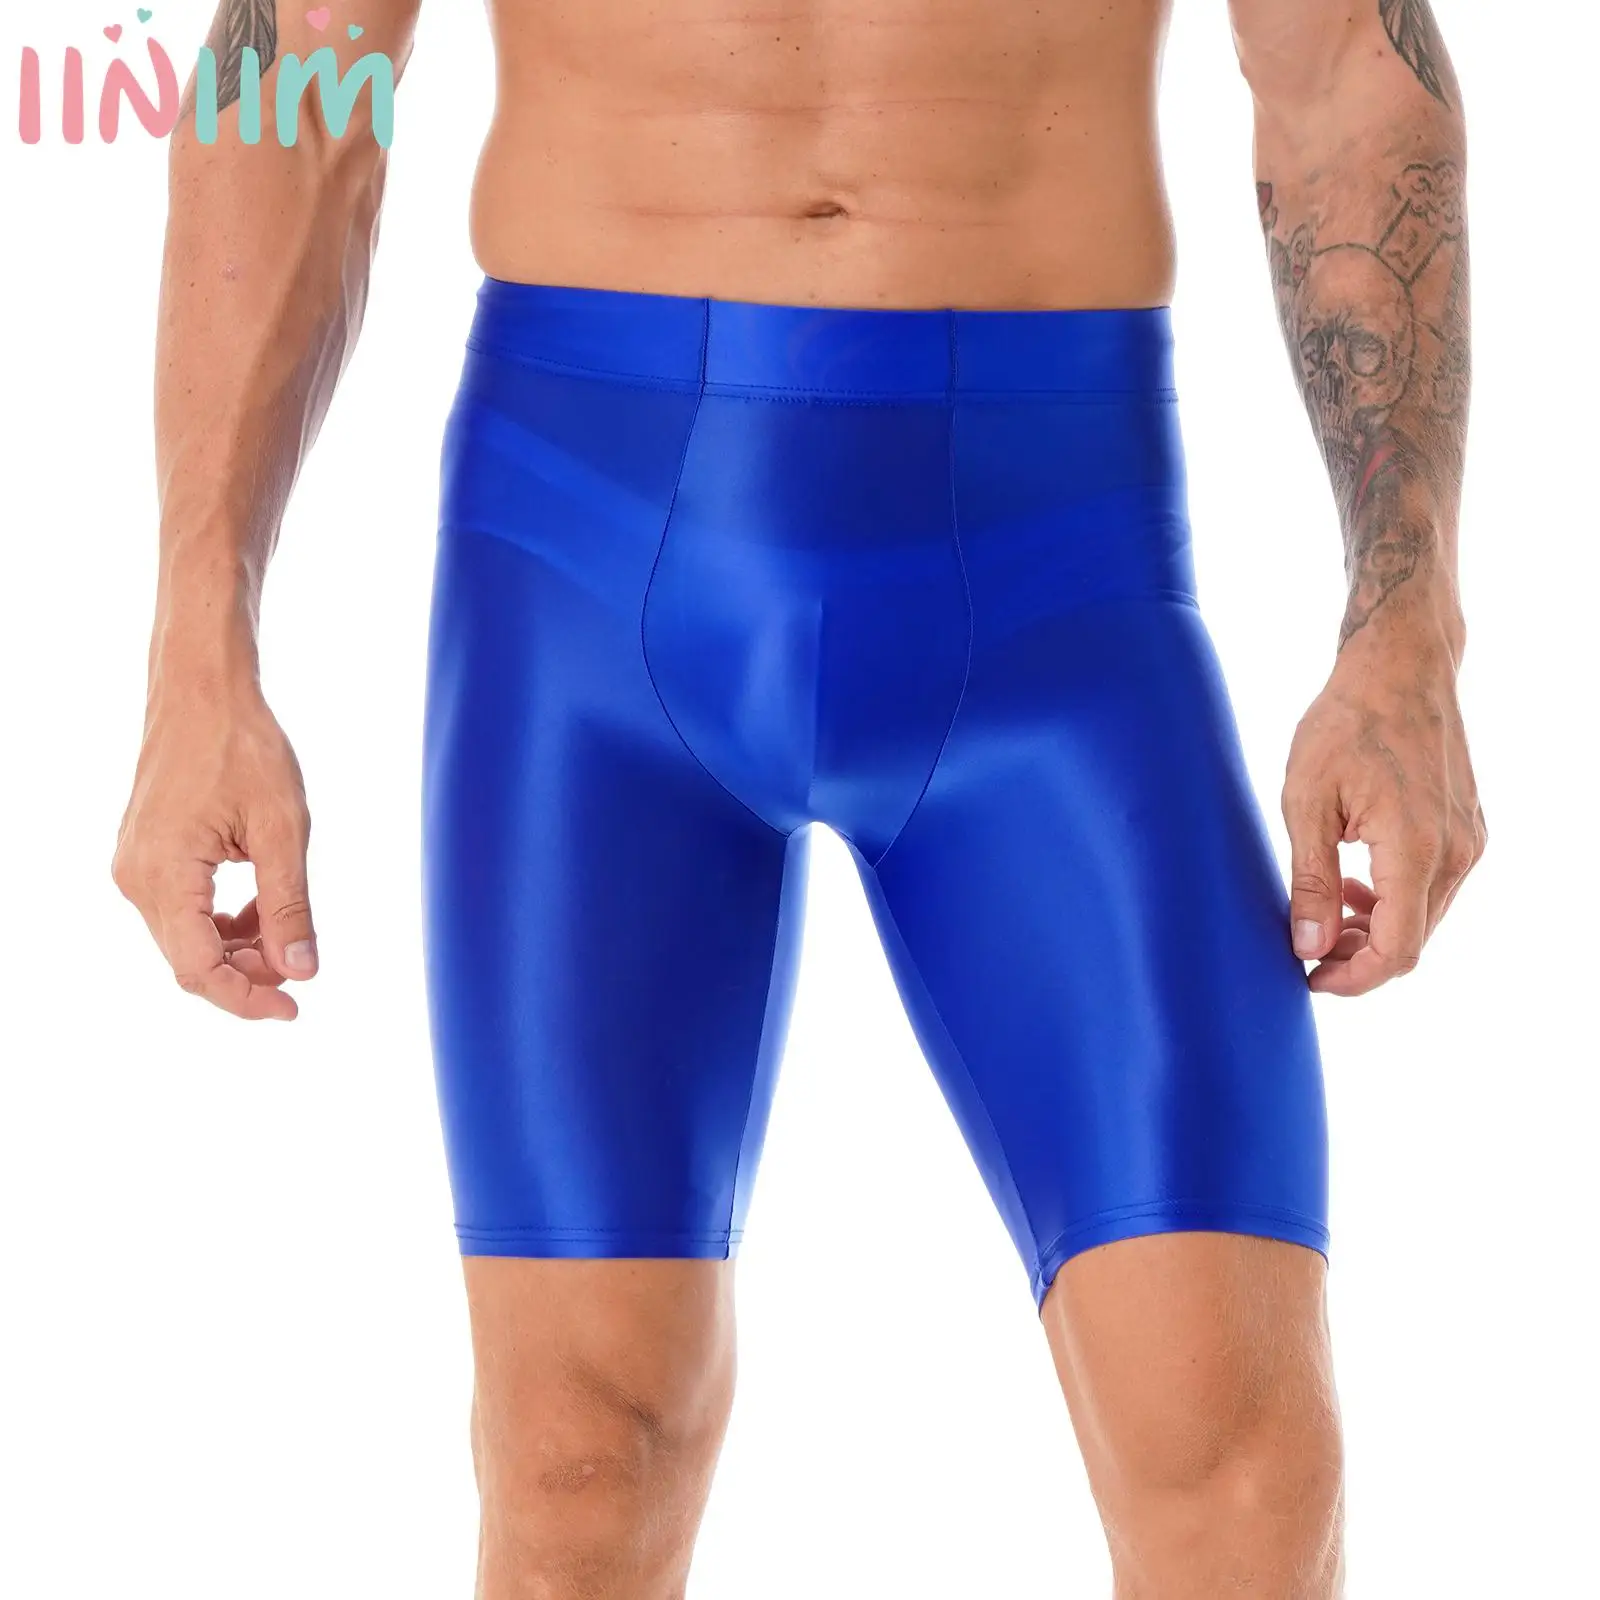 

Mens Glossy Solid Color Shorts Swimwear Sport Fitness Gym Elastic Waistband Short Leggings Athletic Surfing Sheer Skinny Trunks